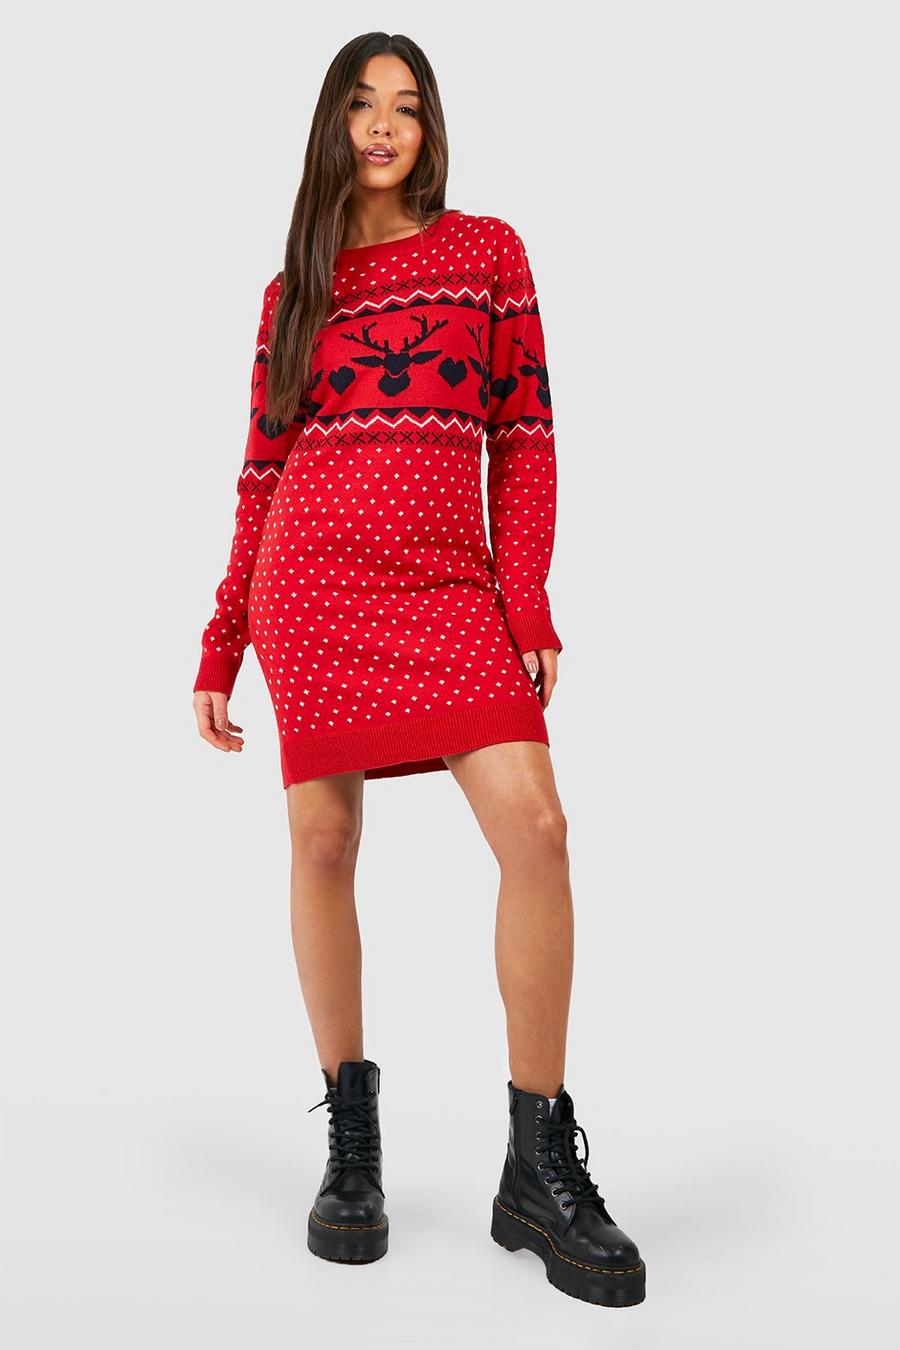 Red Hearts Fairisle Christmas Sweater Dress